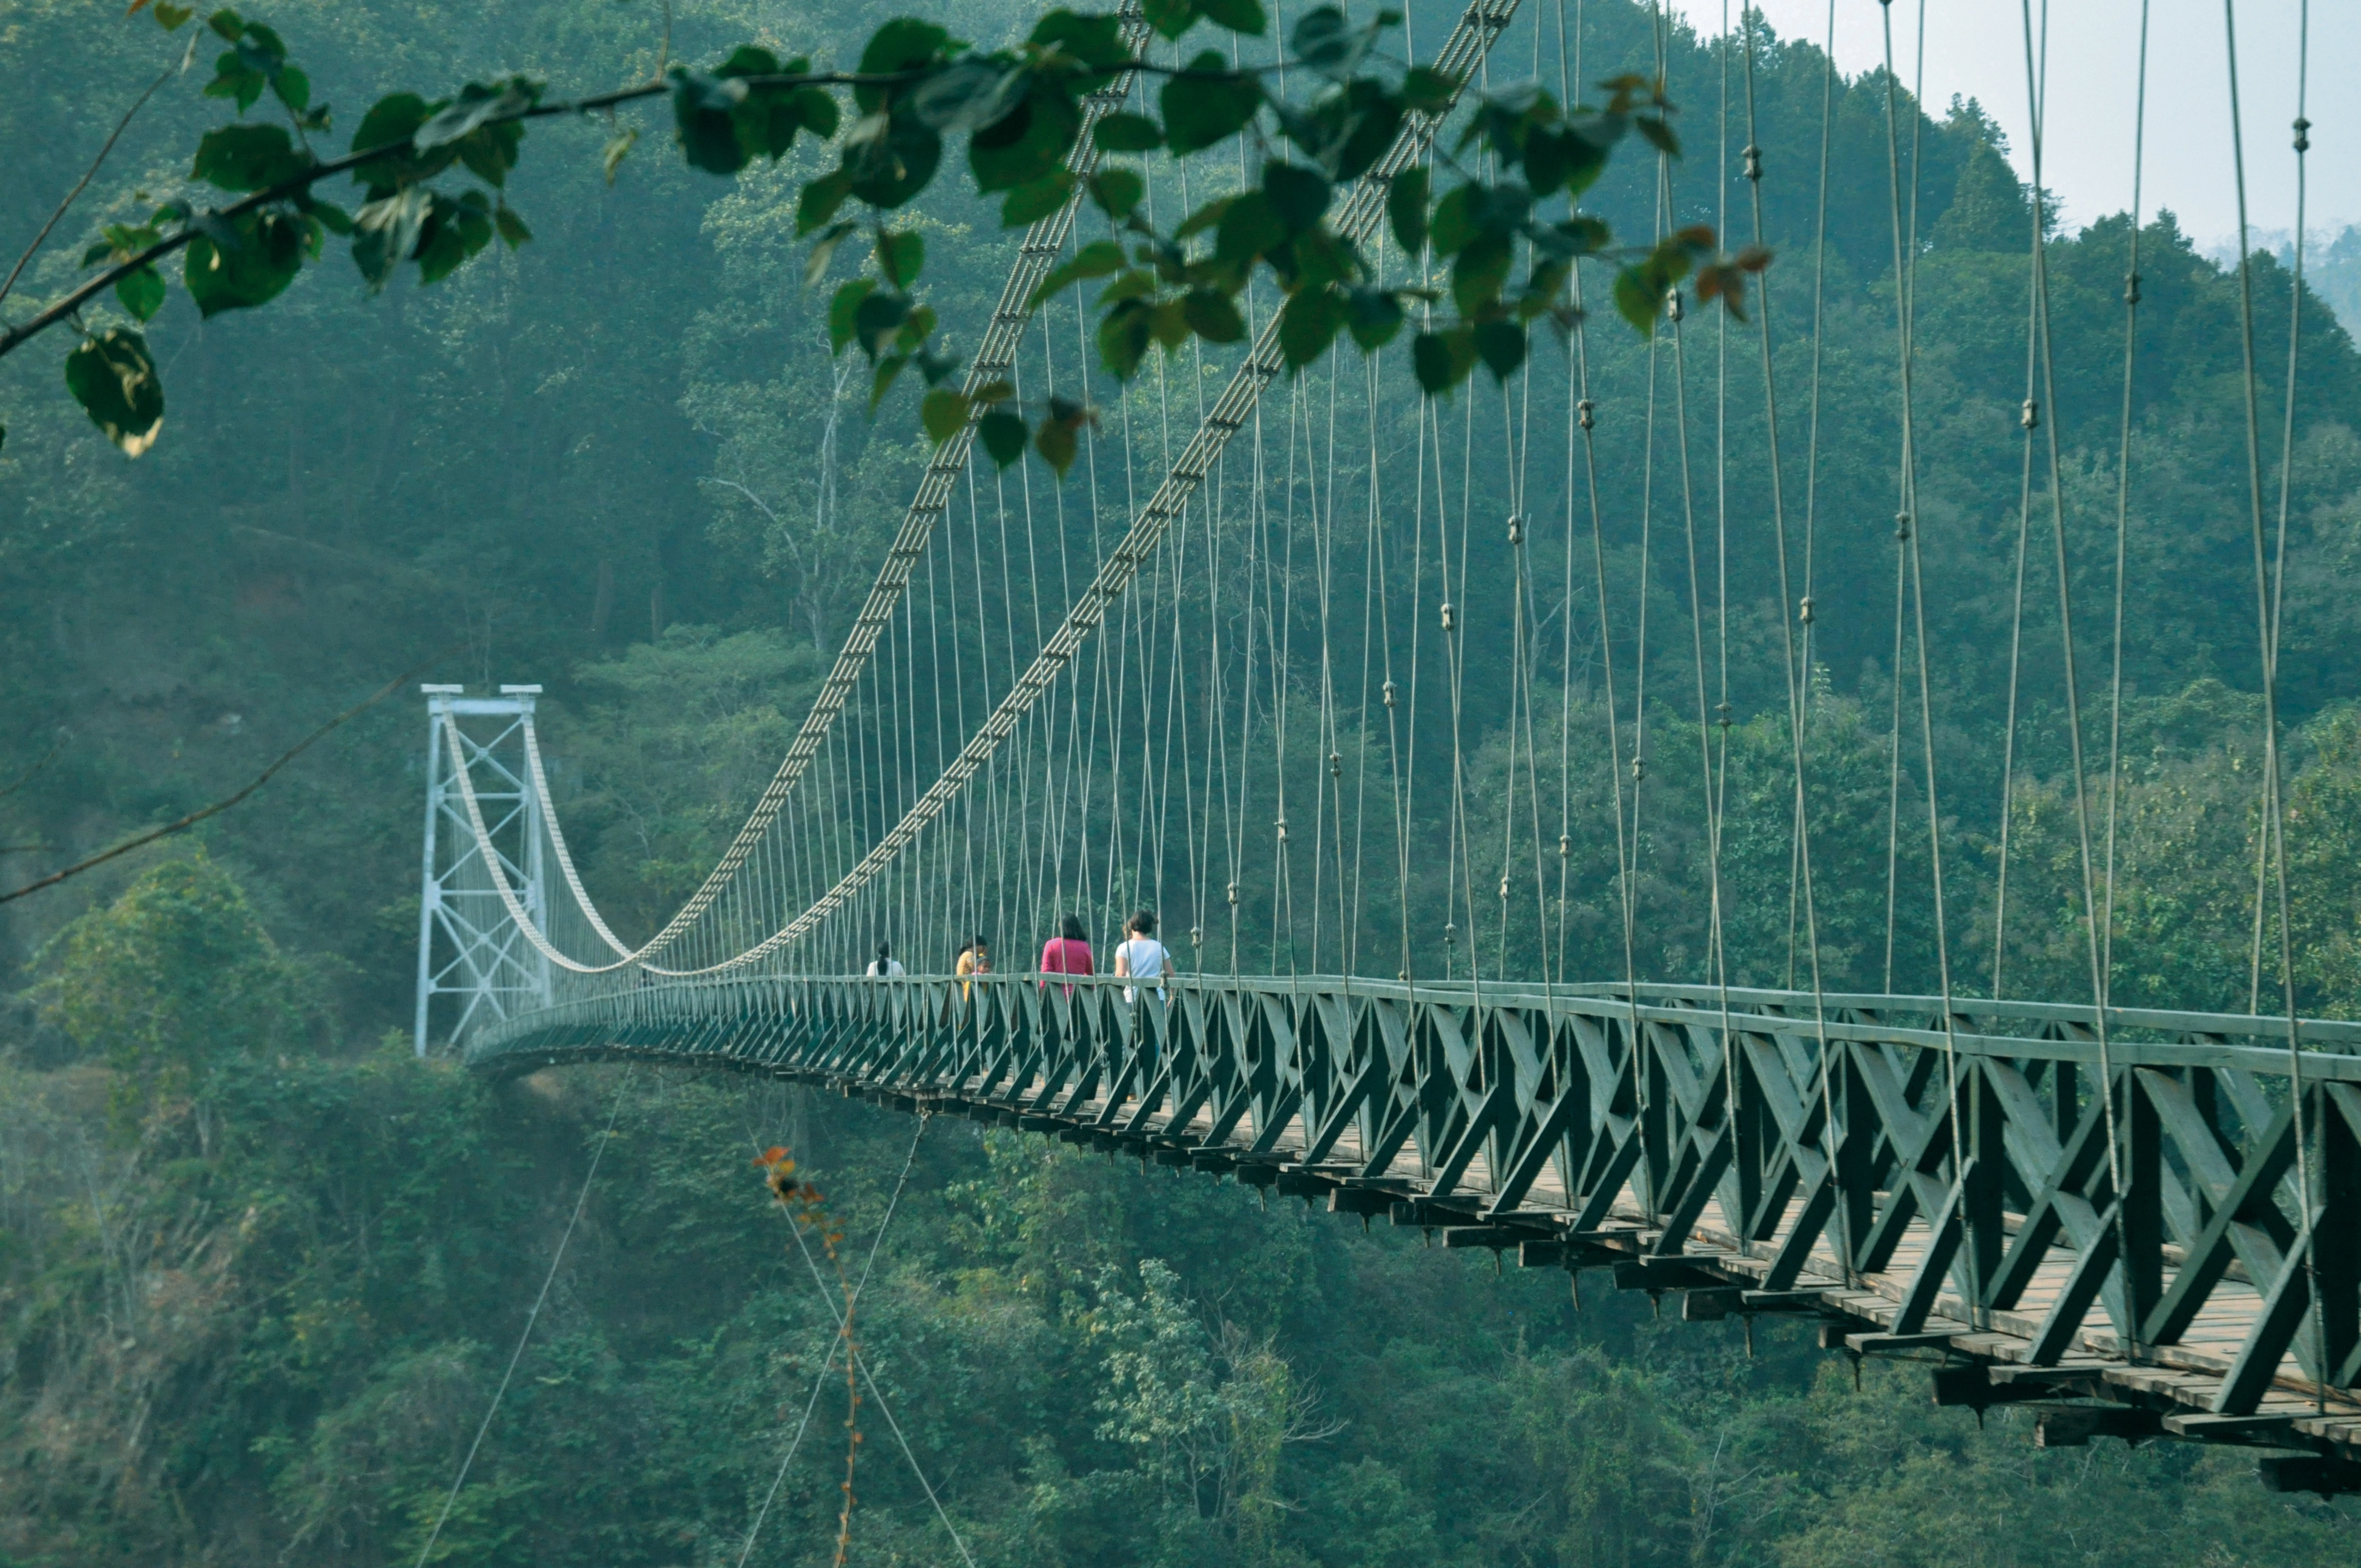 Scenic view of a bridge connecting Sikkim and Darjeeling, surrounded by lush greenery and mountainous terrain [Image via Travel Journalist, Subhasish Chakraborty].